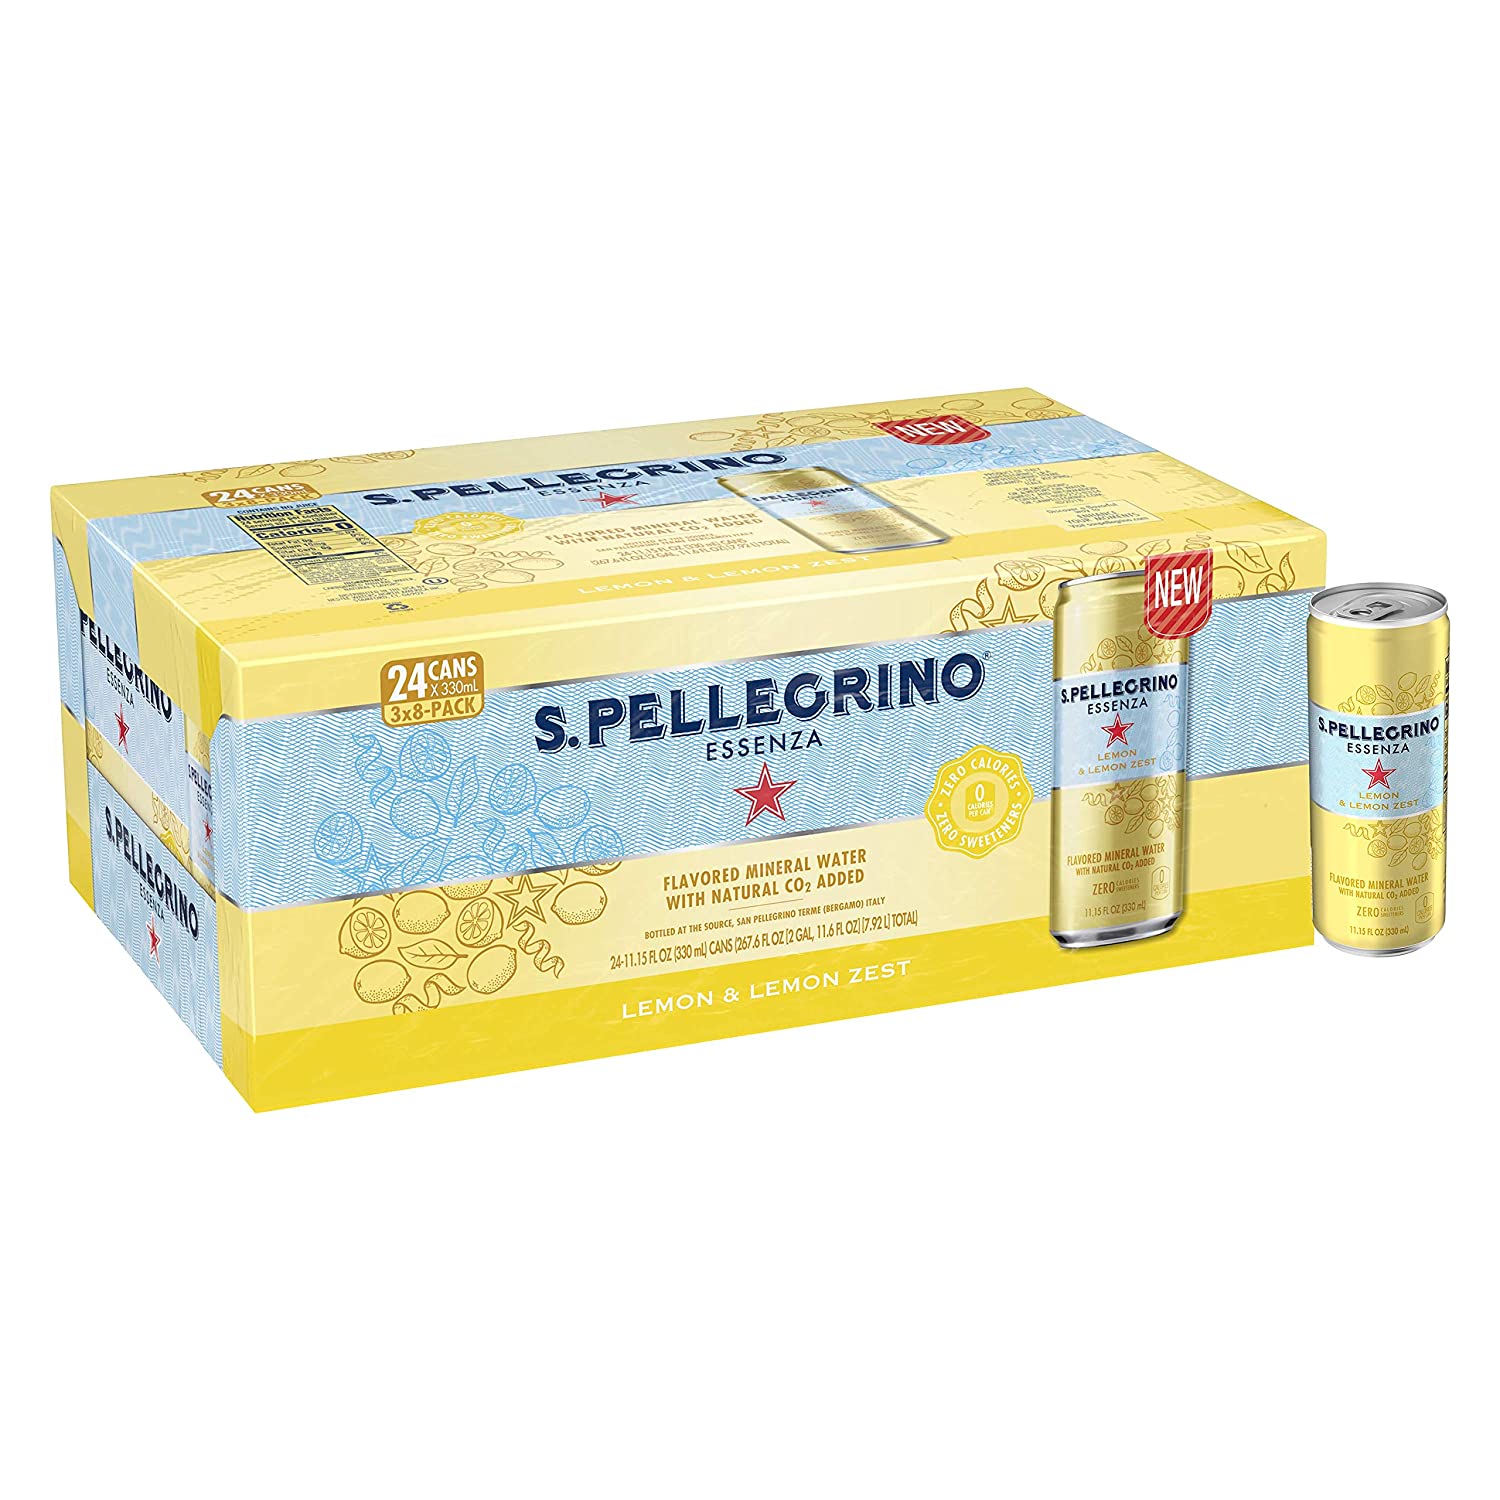 S.Pellegrino Essenza柠檬和柠檬皮调味的矿泉水罐，11.15盎司（24包）